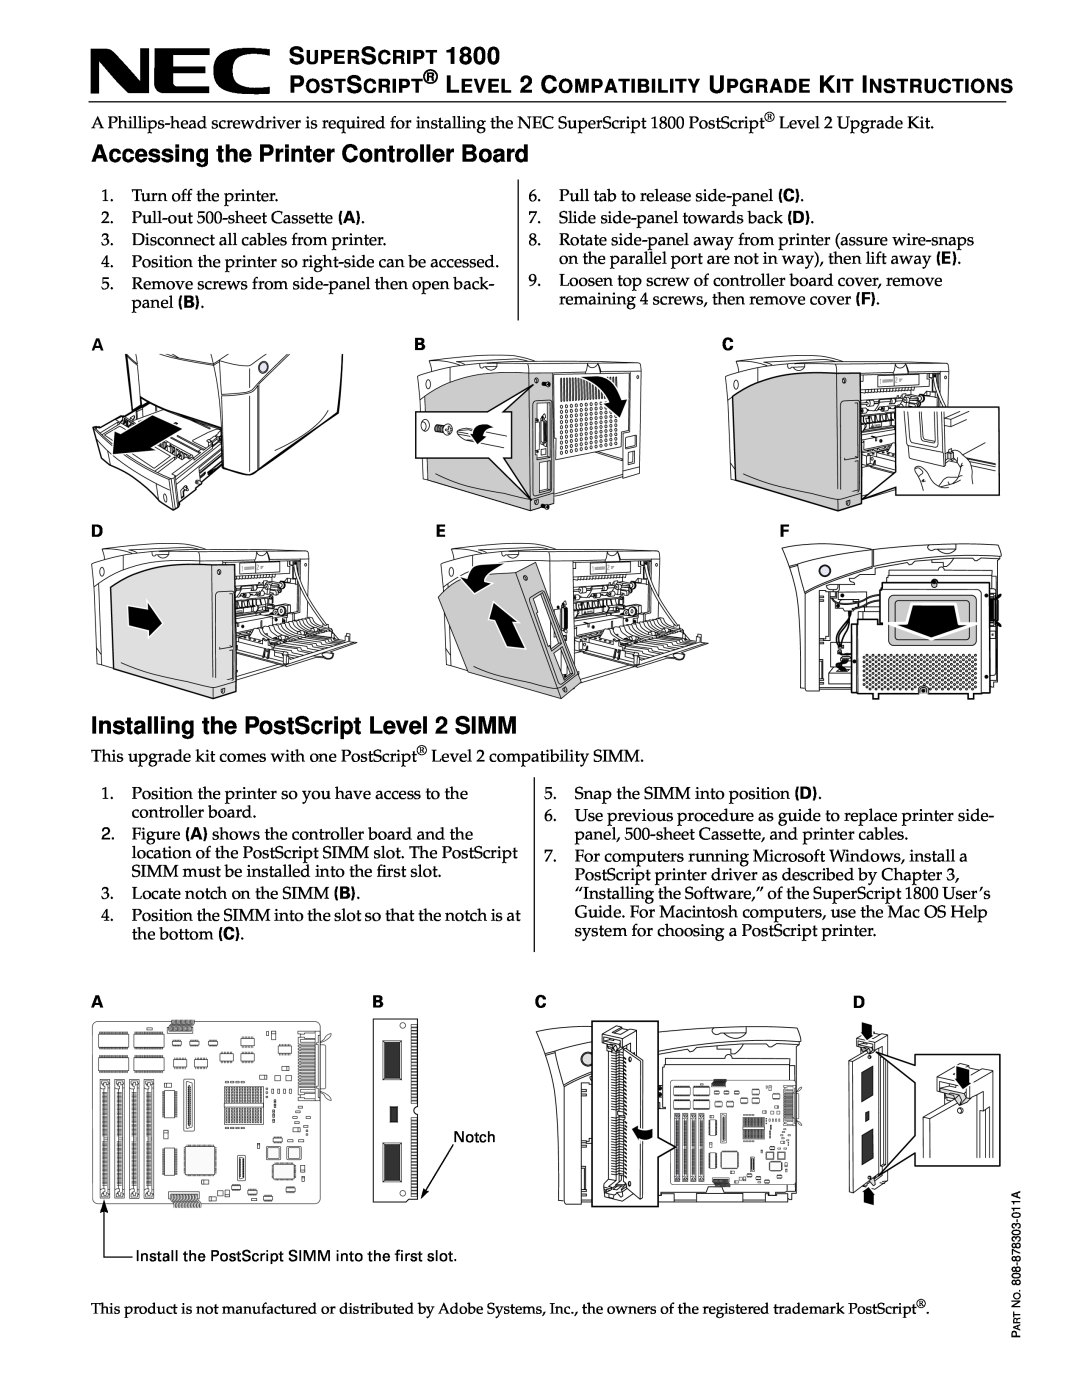 NEC 1800 manual Accessing the Printer Controller Board, Installing the PostScript Level 2 SIMM, Nec Superscript 